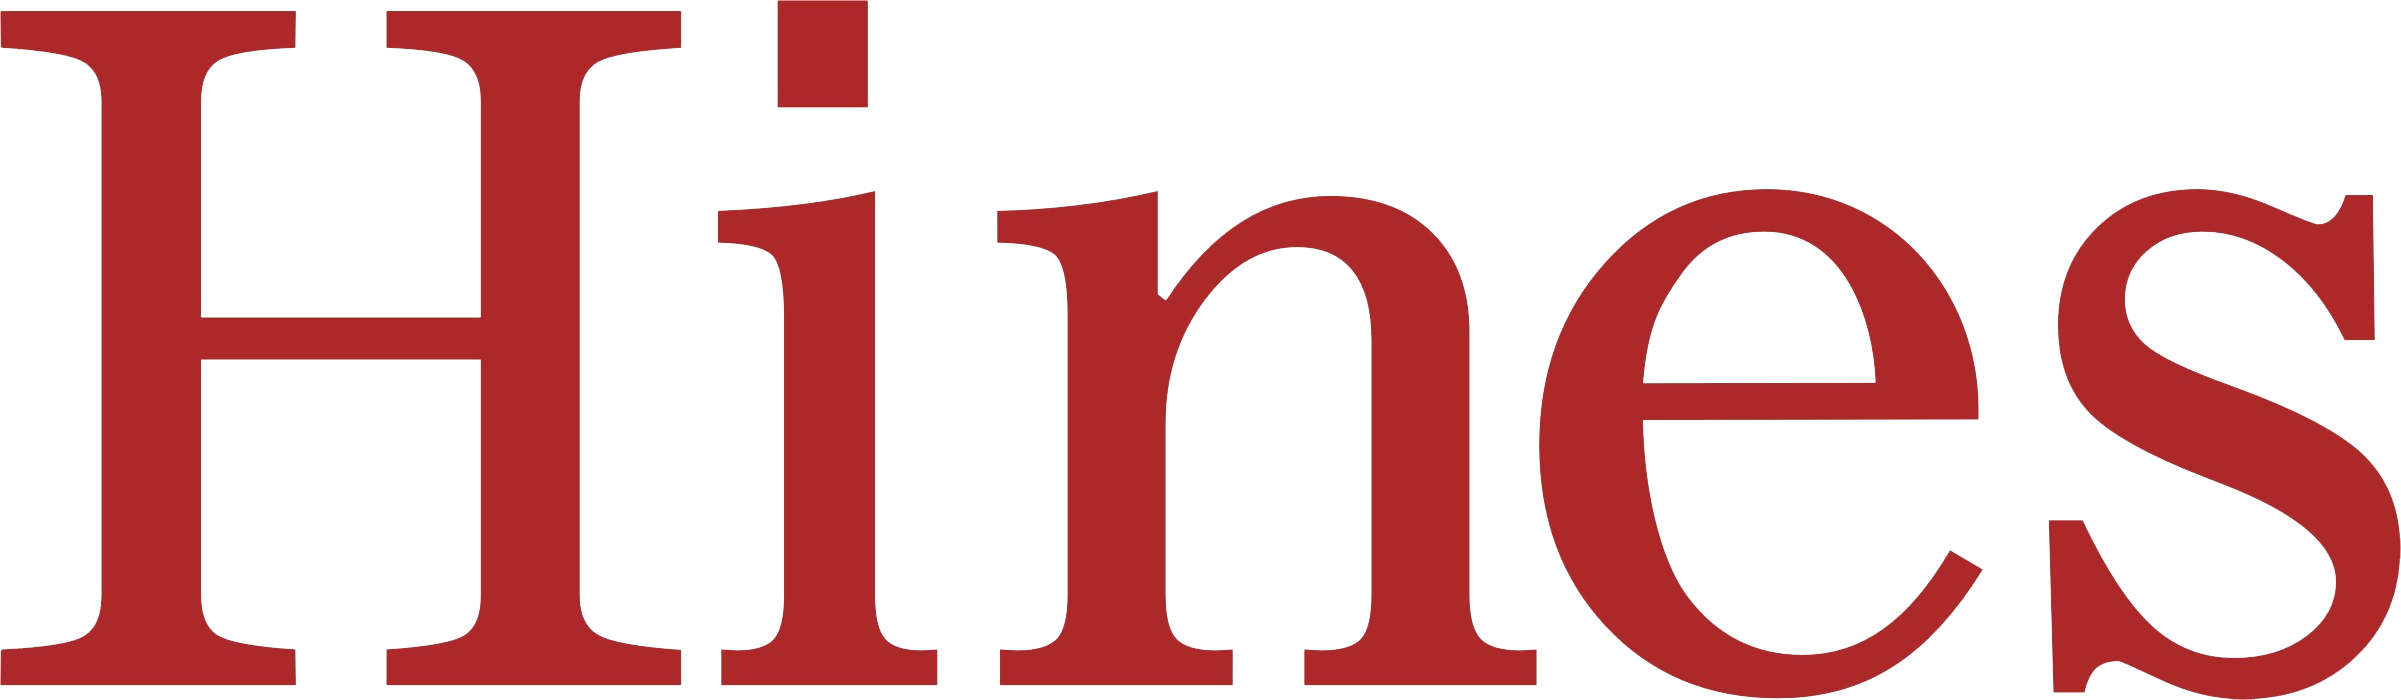 Hines_logo